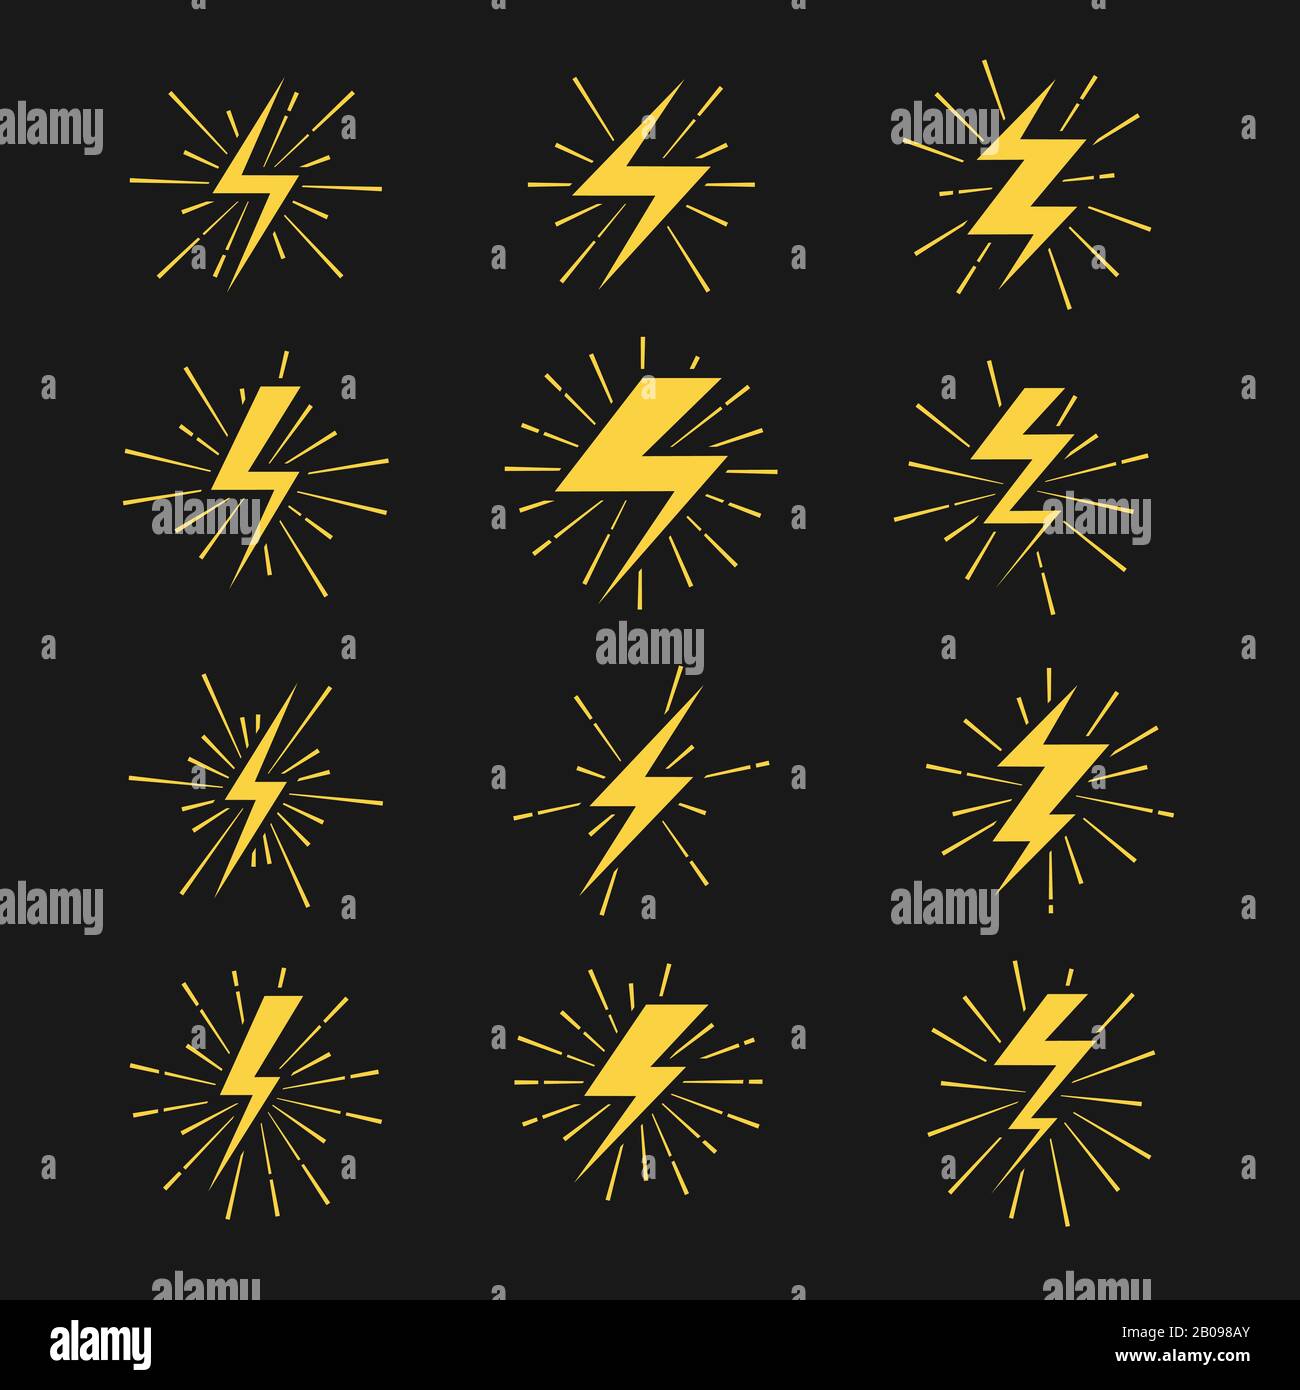 Lightning bolts vector icons set. Thunderbolt and storm power illustration Stock Vector